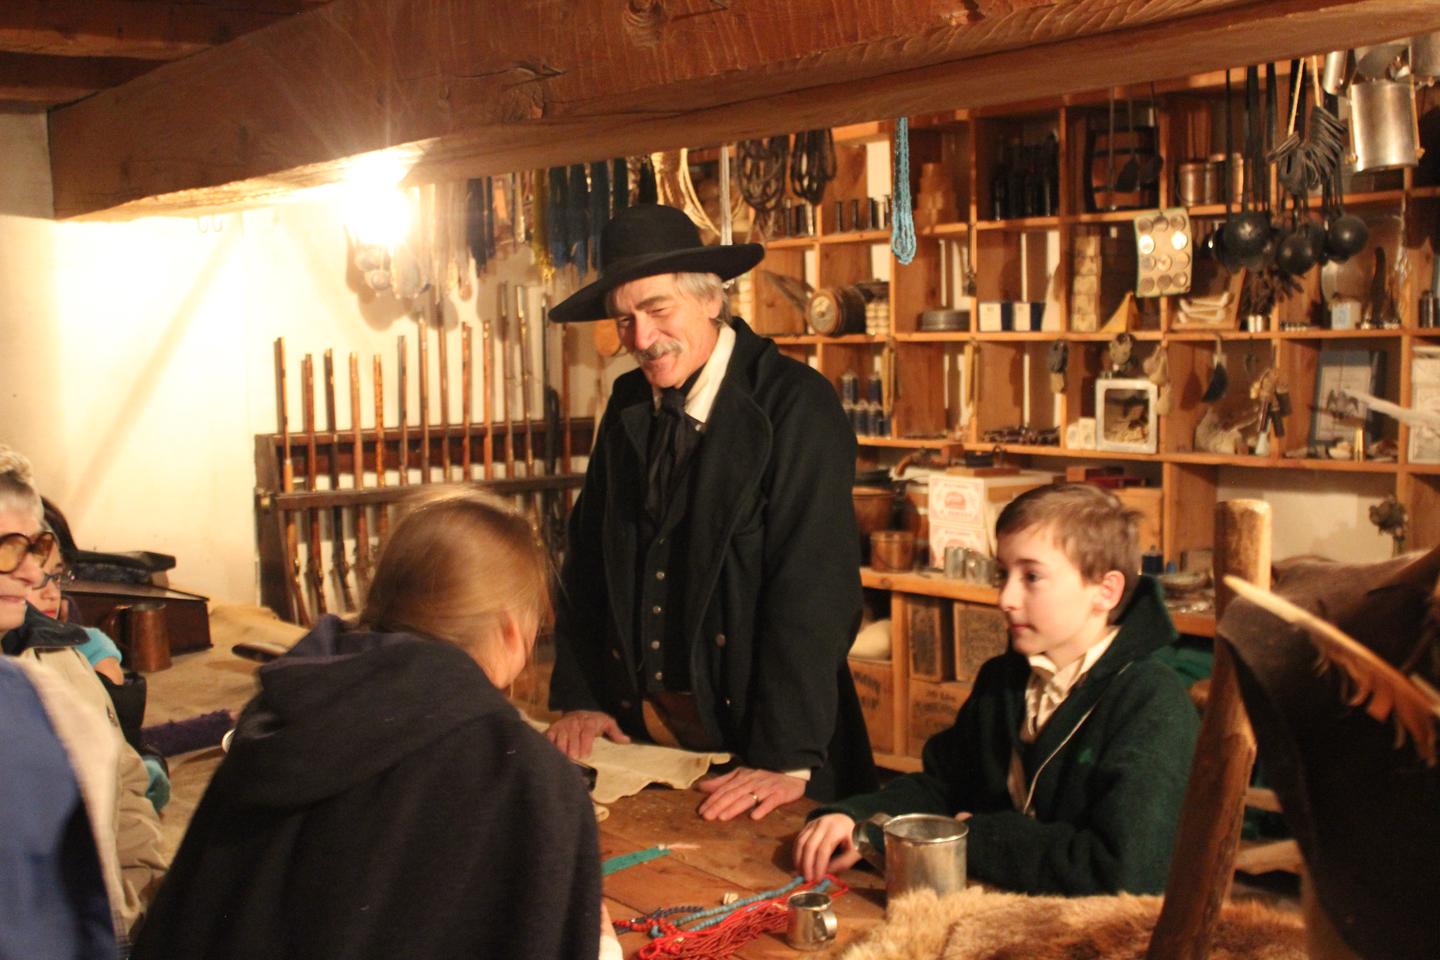 Clerk bartering in Trade Room of Bent's Old Fort